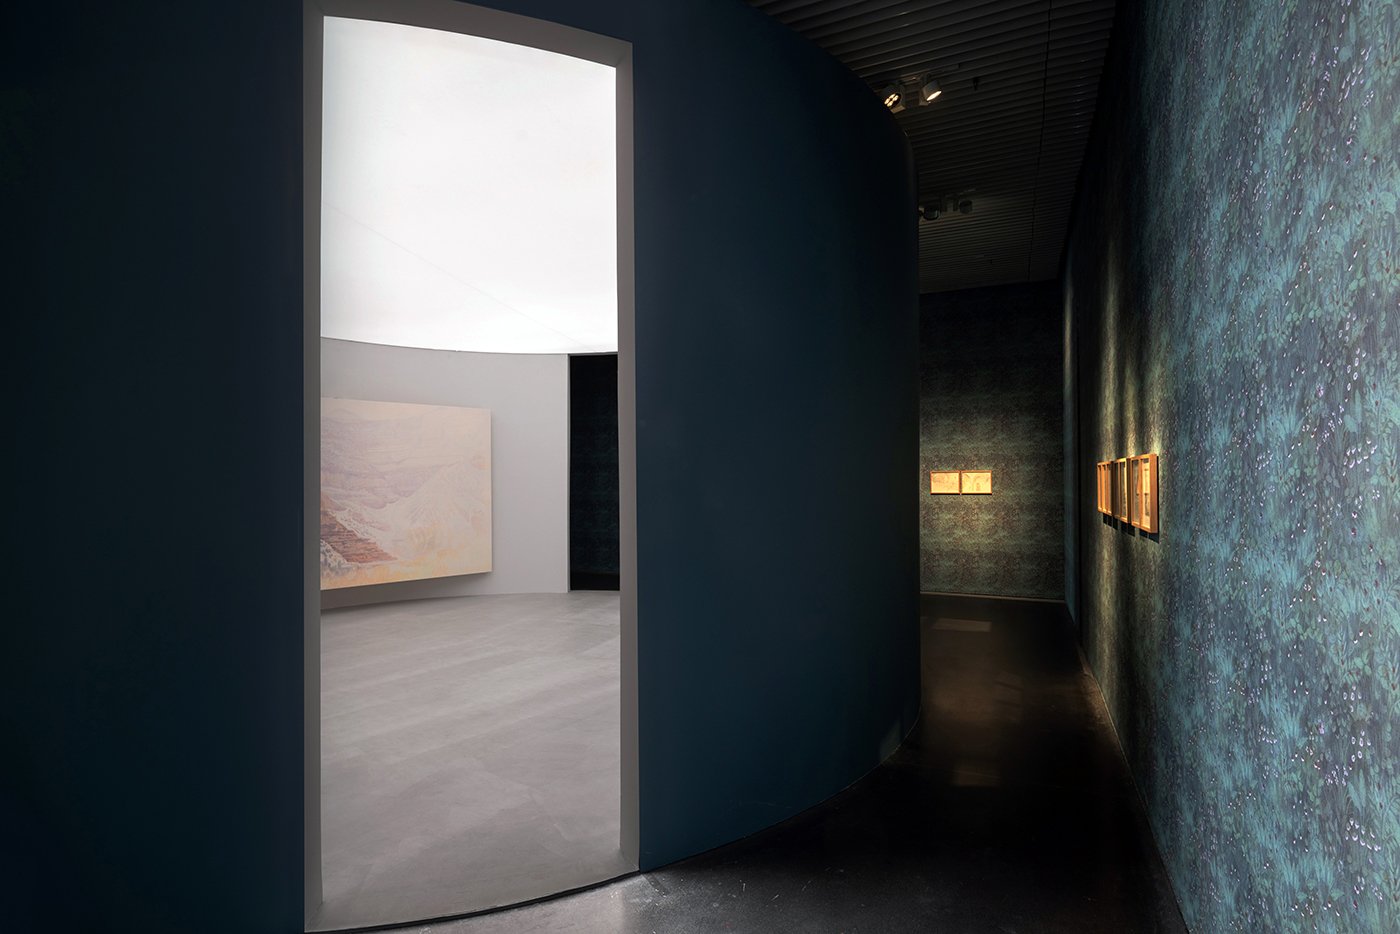 Artist's Rooms : Daniele Genadry